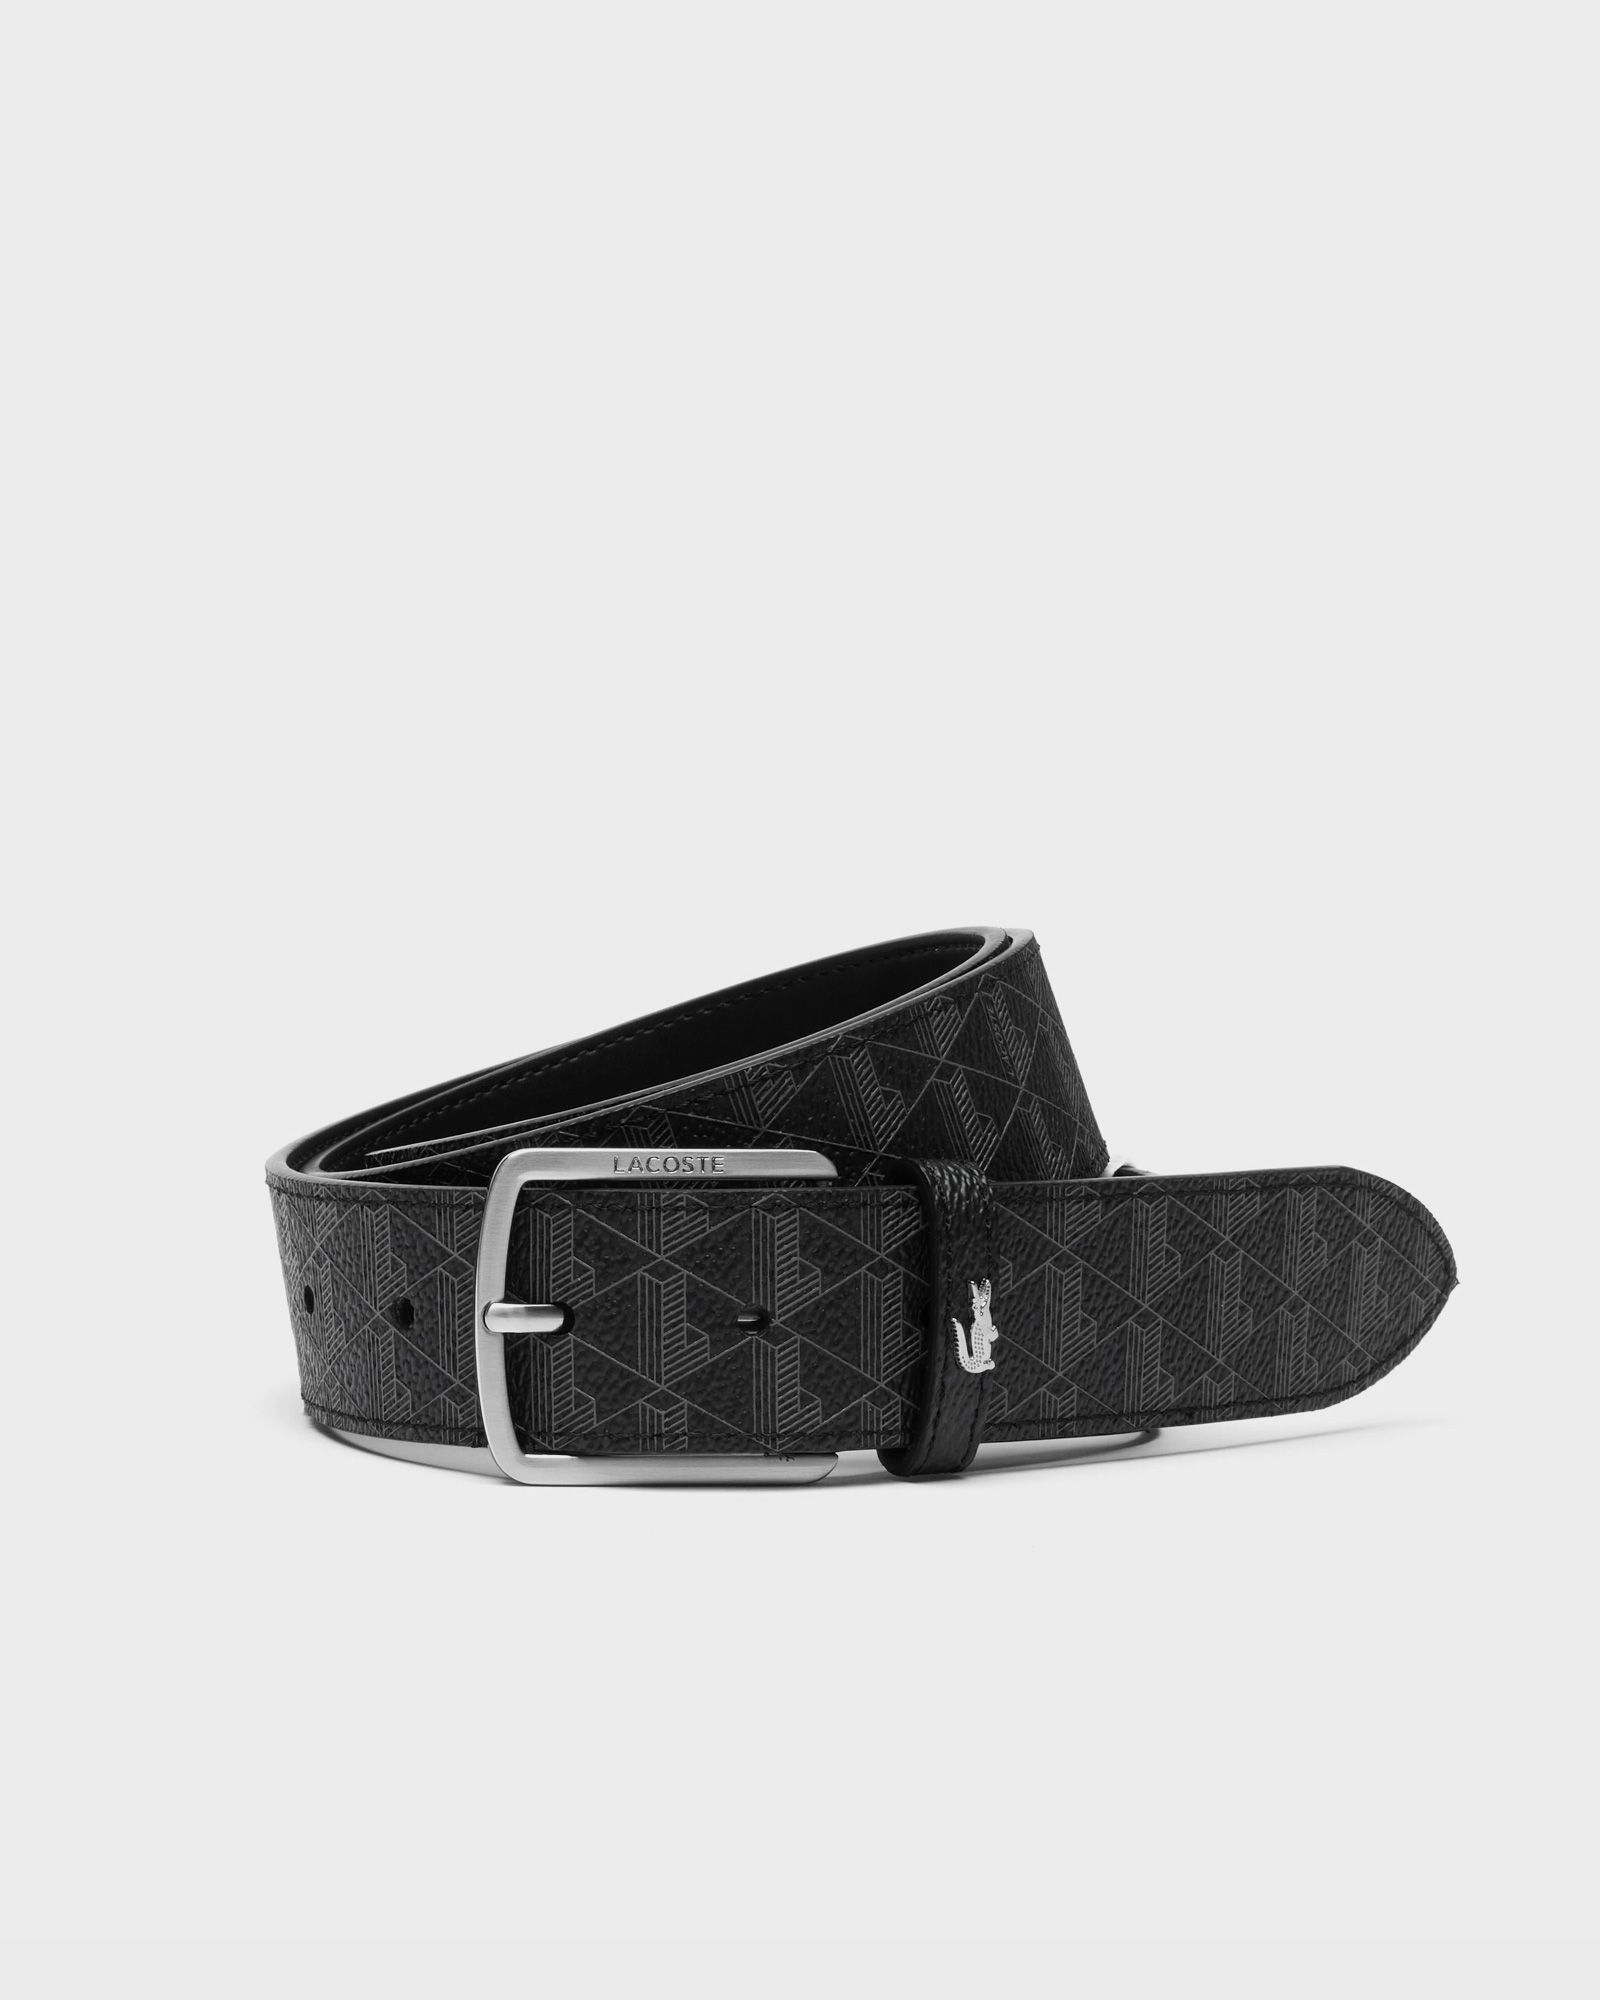 Lacoste - leather goods belt men wallets black in größe:95 cm